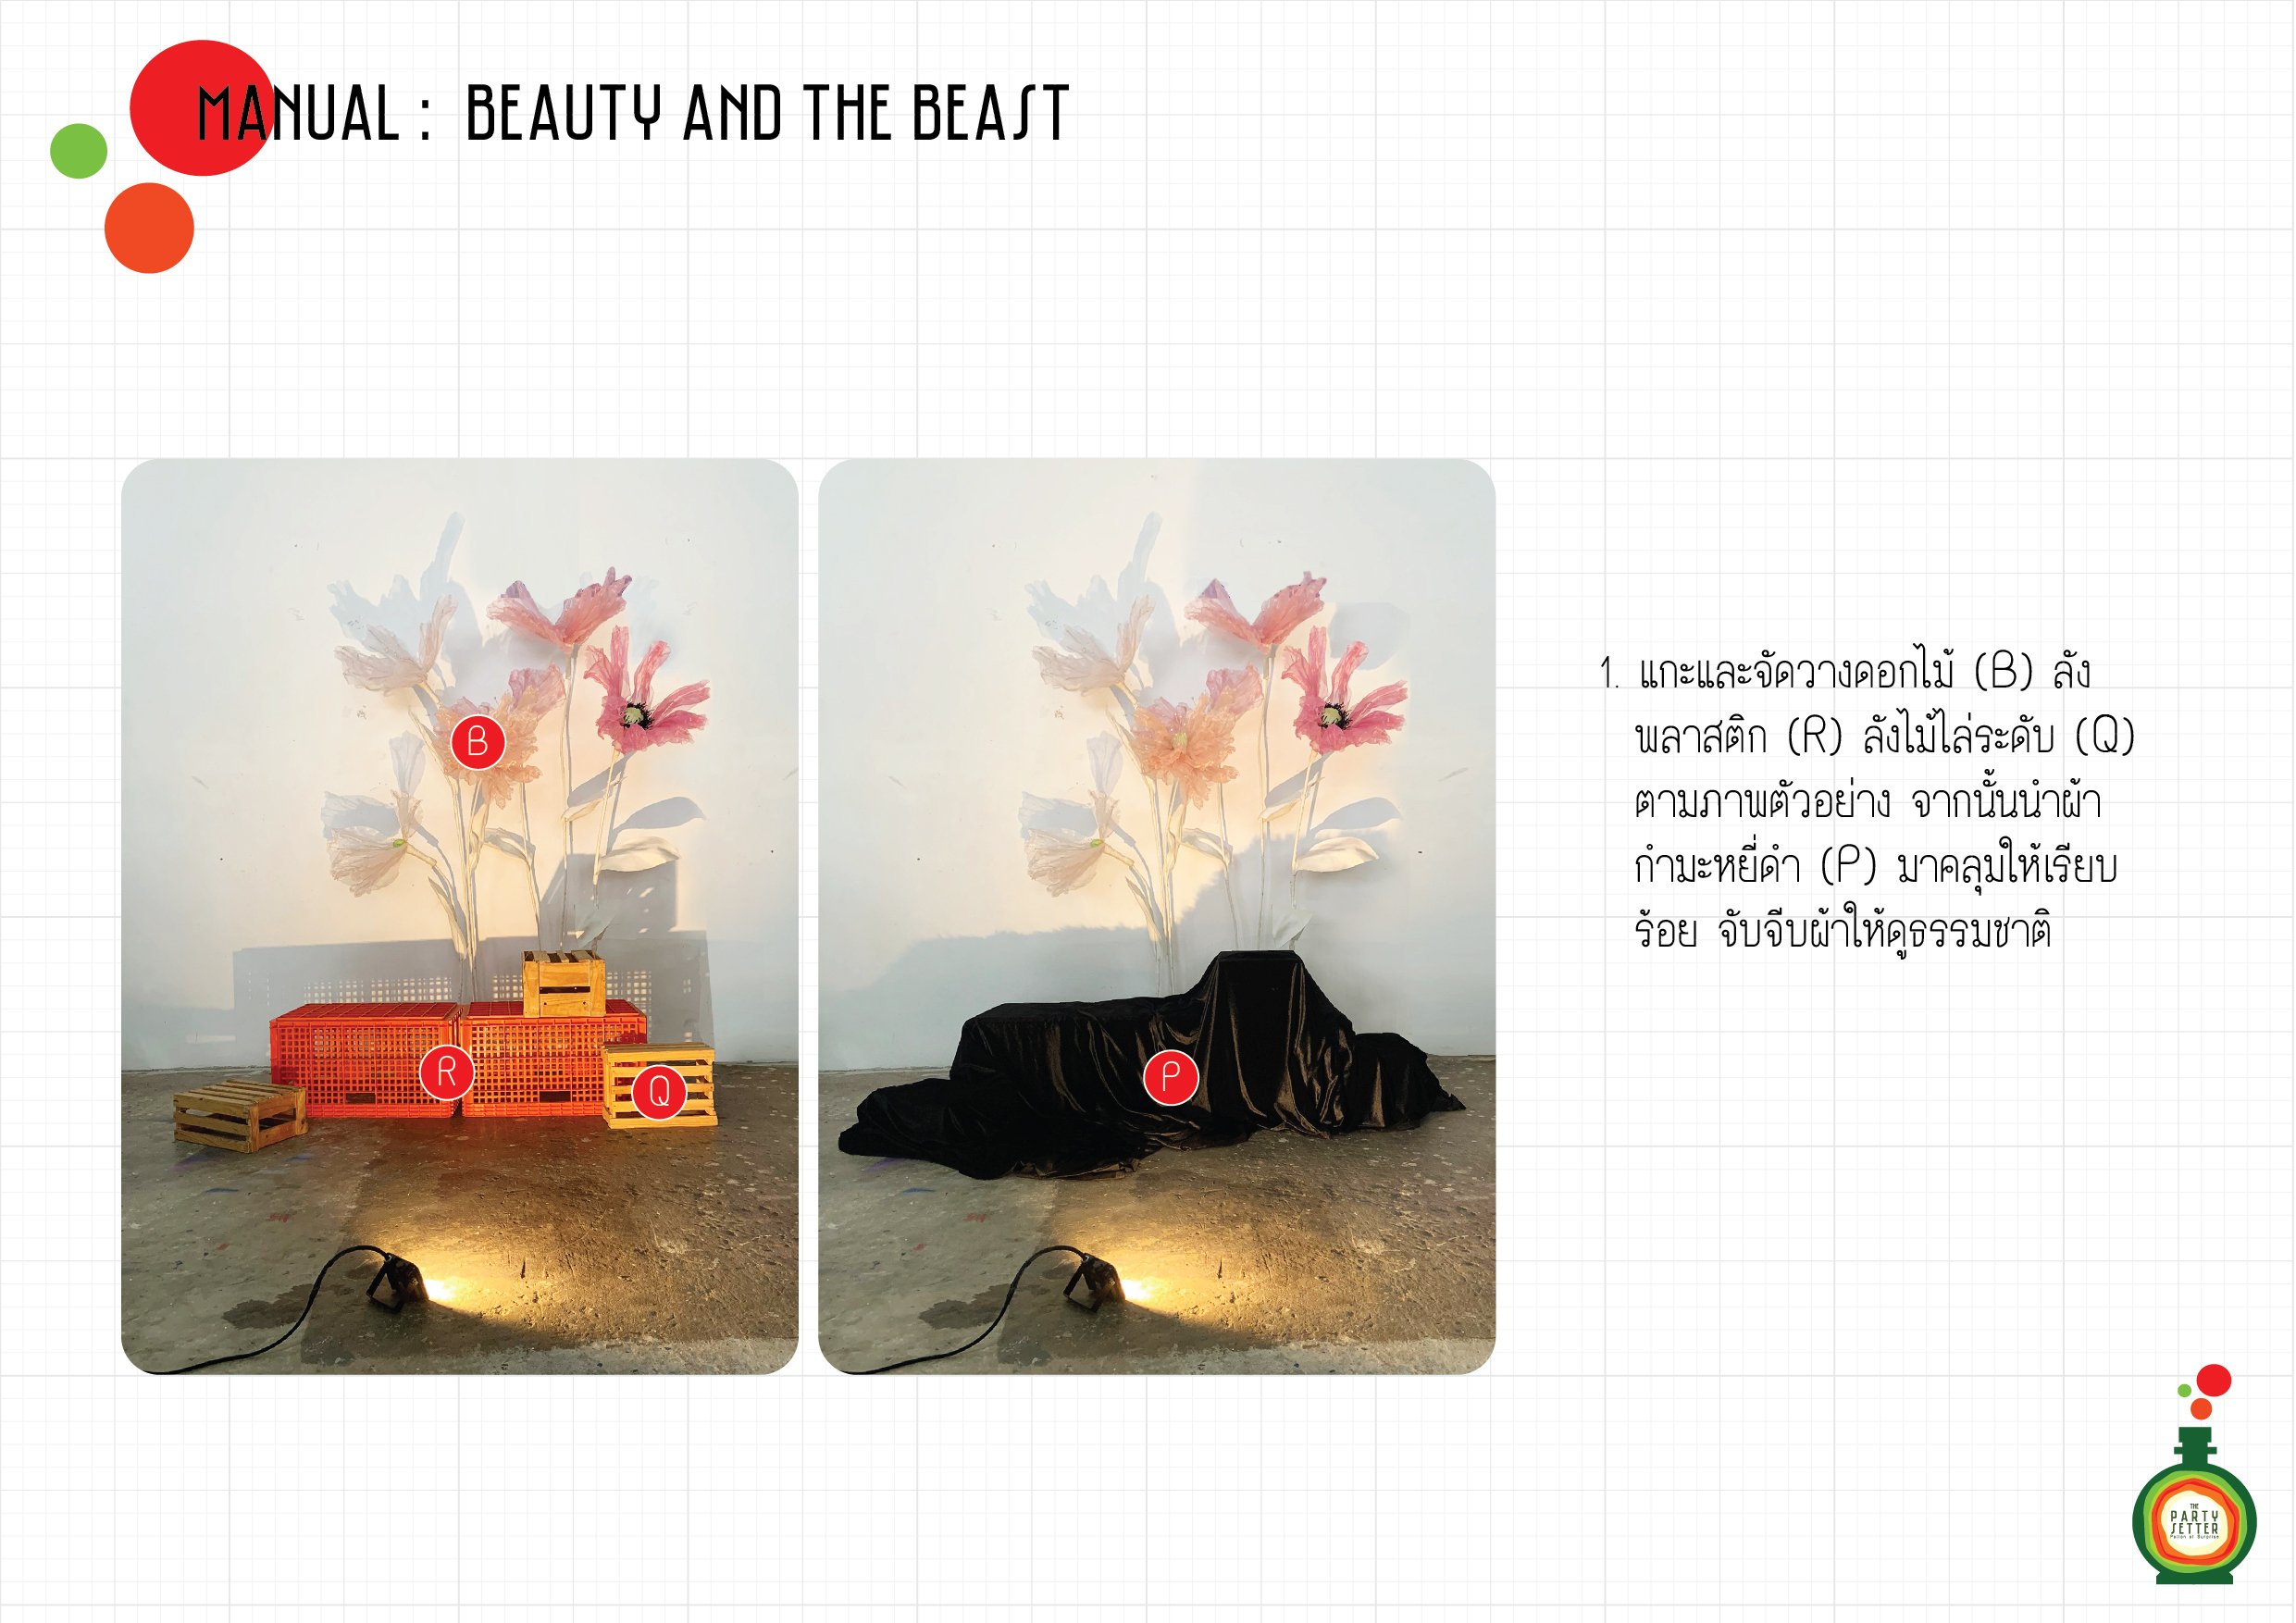 Manual_Beauty and the Beast-01-01.jpg